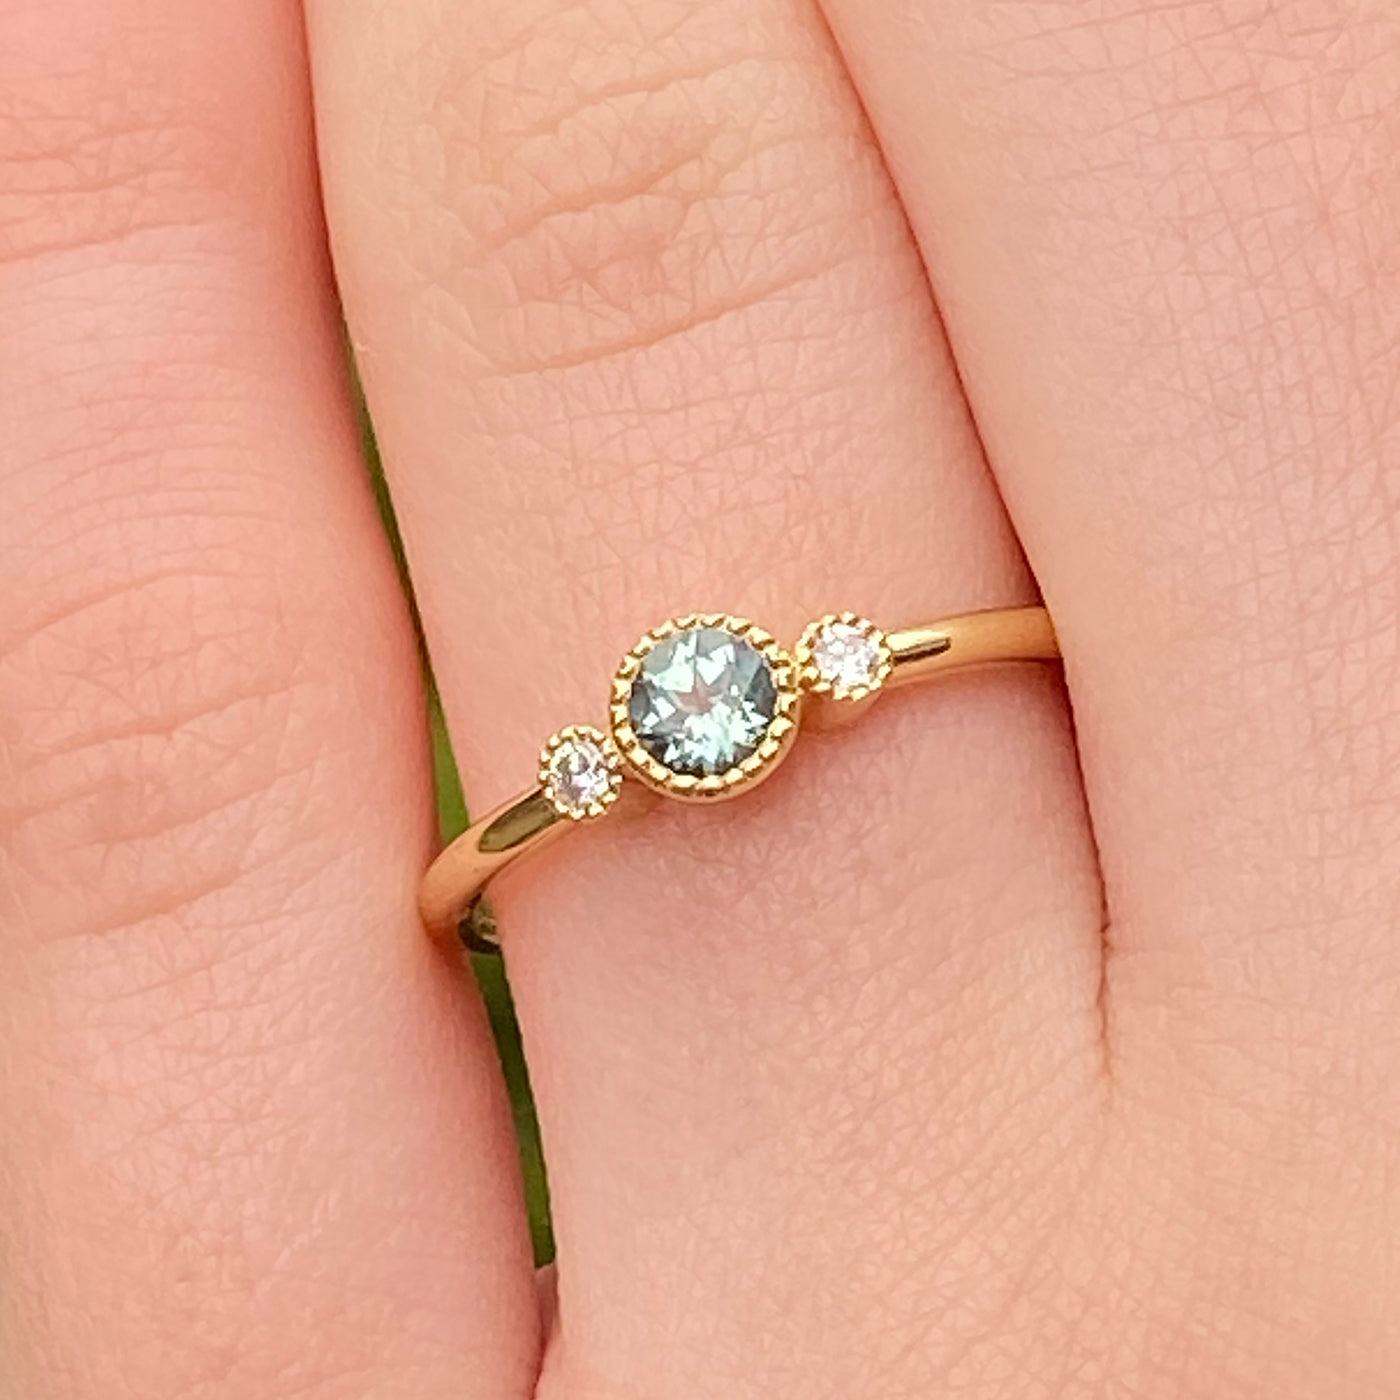 18ct Gold Petite Teal Sapphire & Diamond Trilogy Engagement Ring (Size L, Resize J - L 1/2)